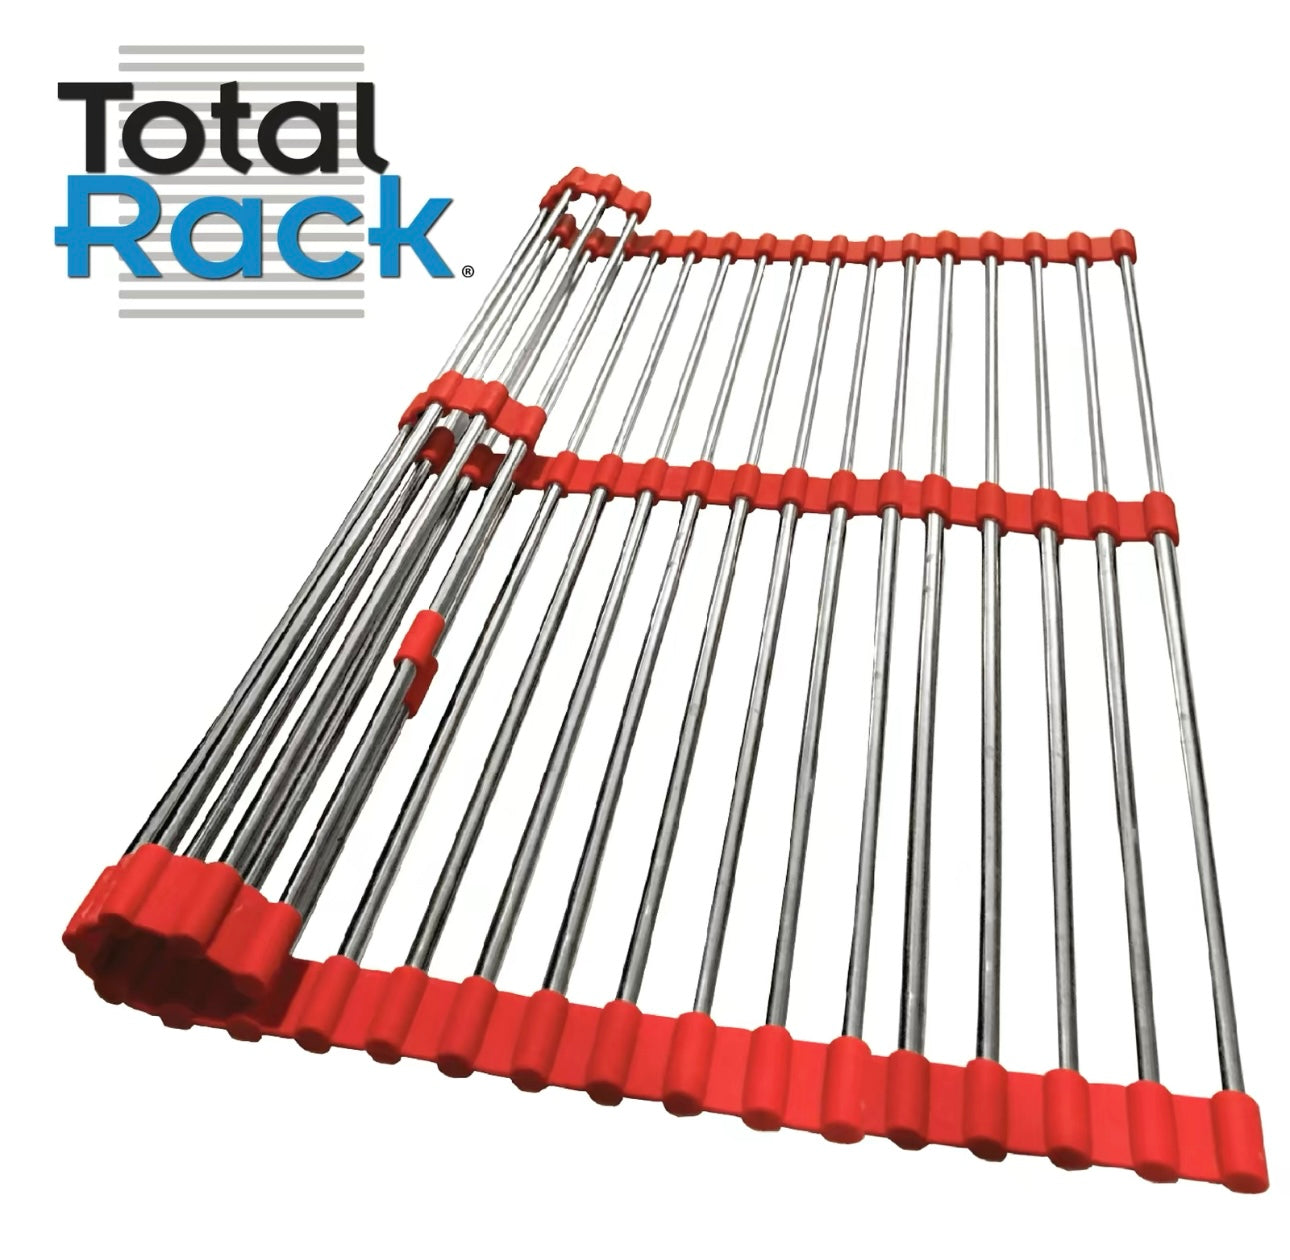 Total Rack® Multipurpose Kitchen